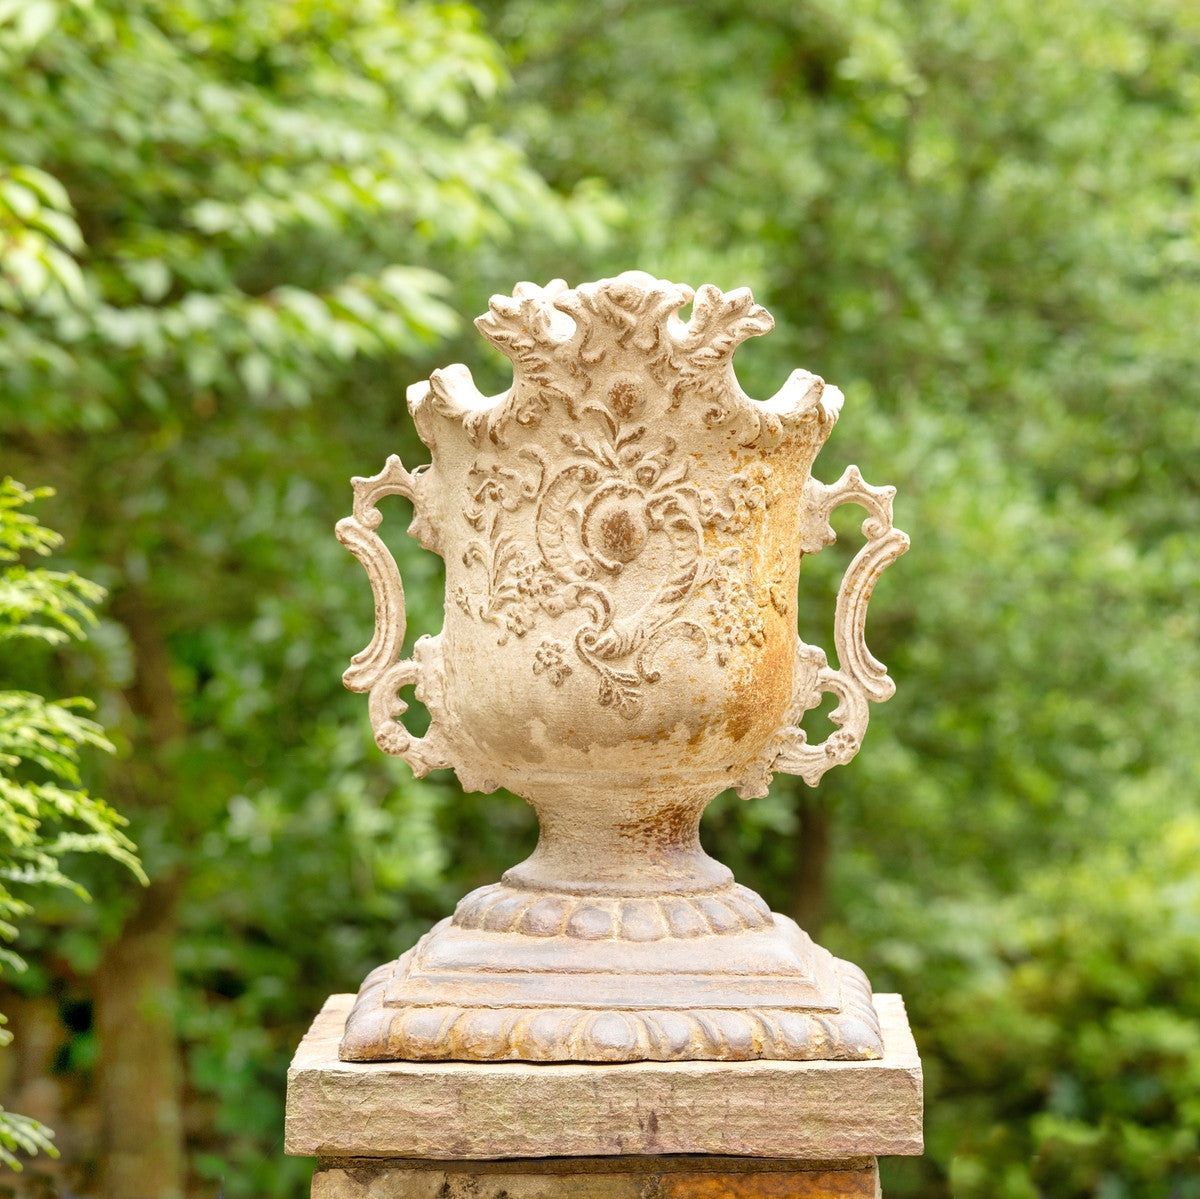 Vintage Stone Estate Urns restoration hardware, Aged Stone Garden Urns for sale